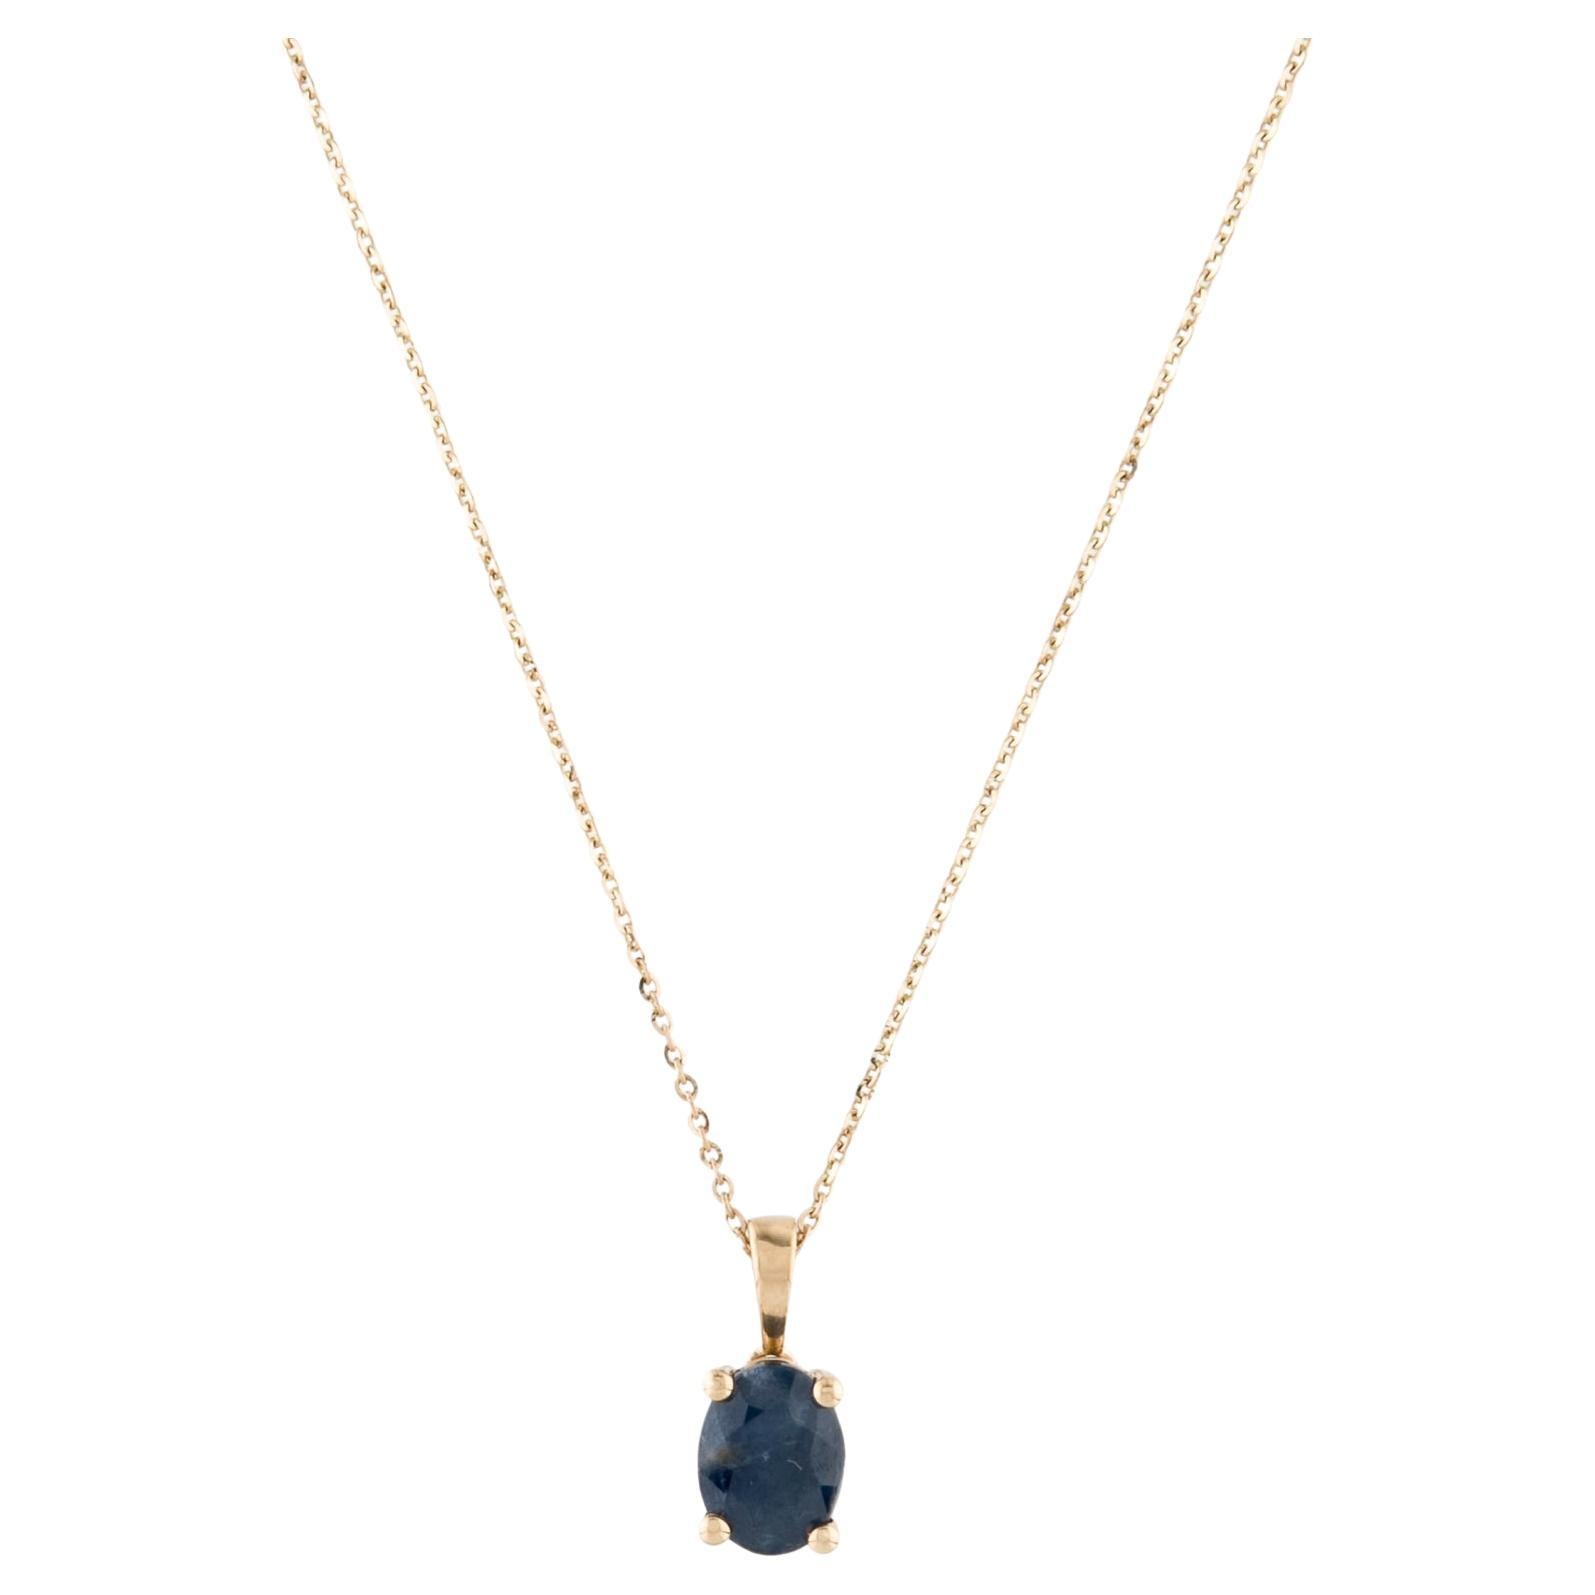 Stunning 14K Sapphire Pendant Necklace  1.50ct Sparkling Gemstone Accent Piece